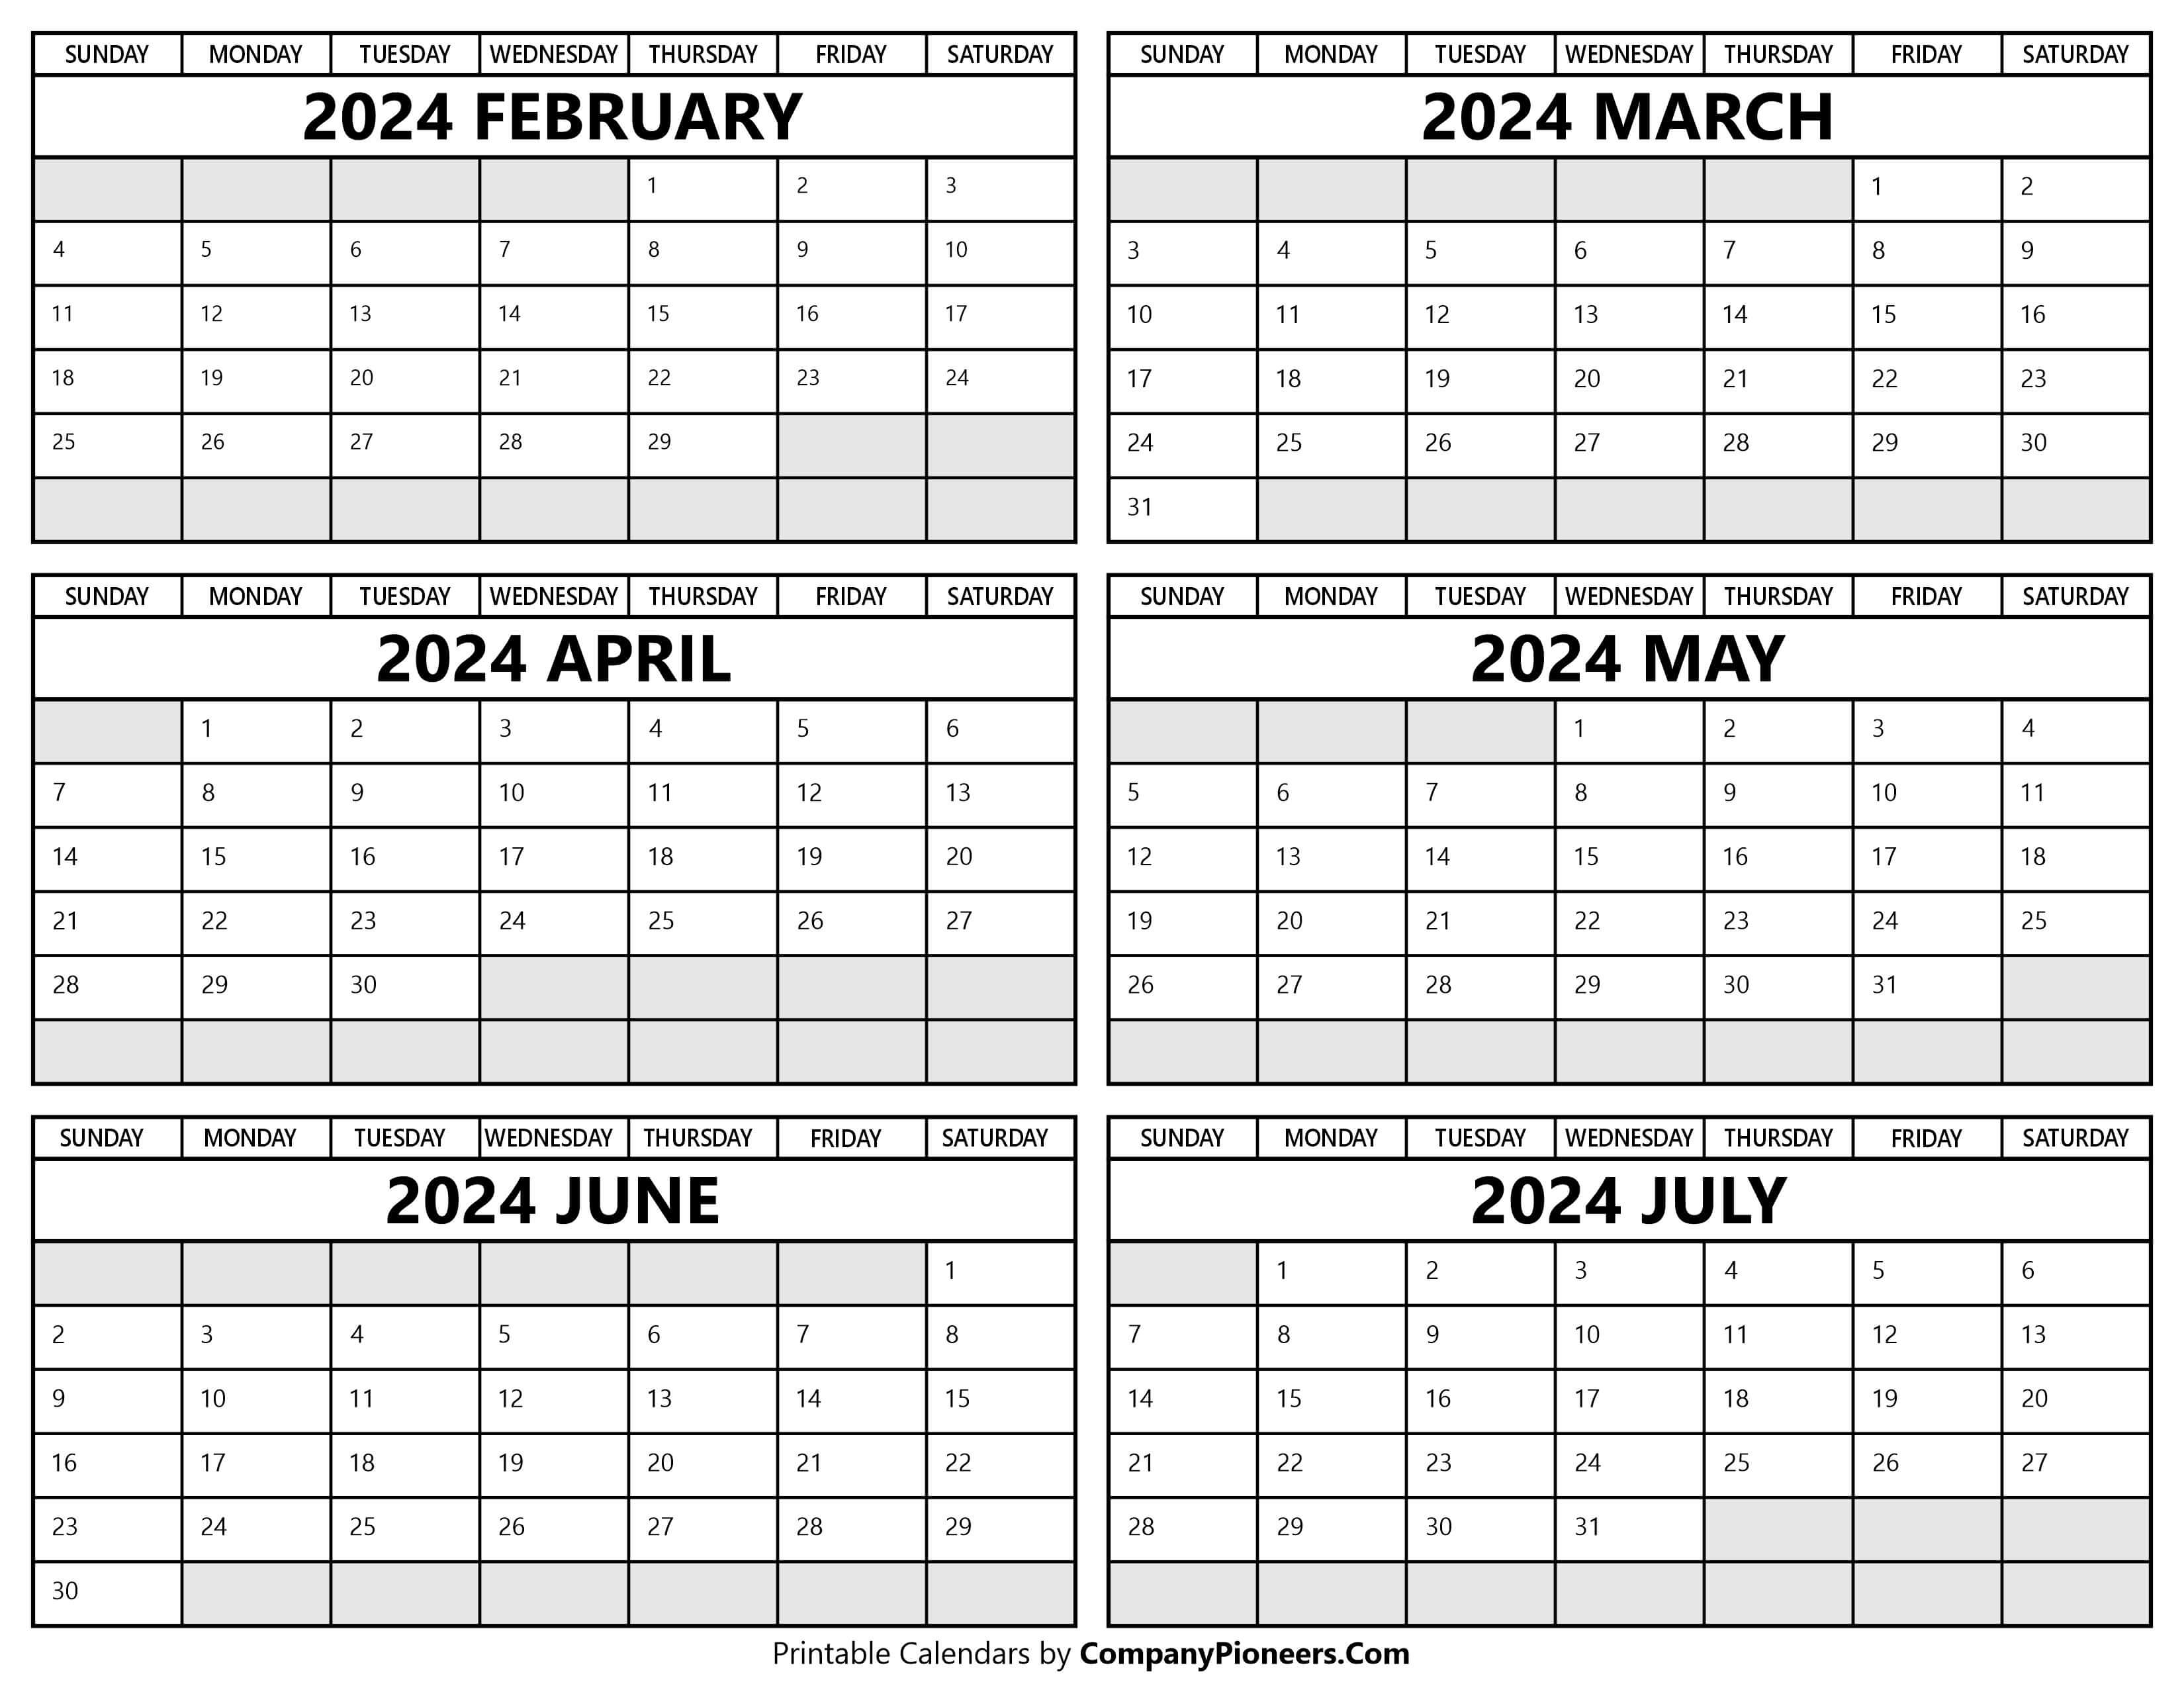 Printable 2024 February to July Calendar